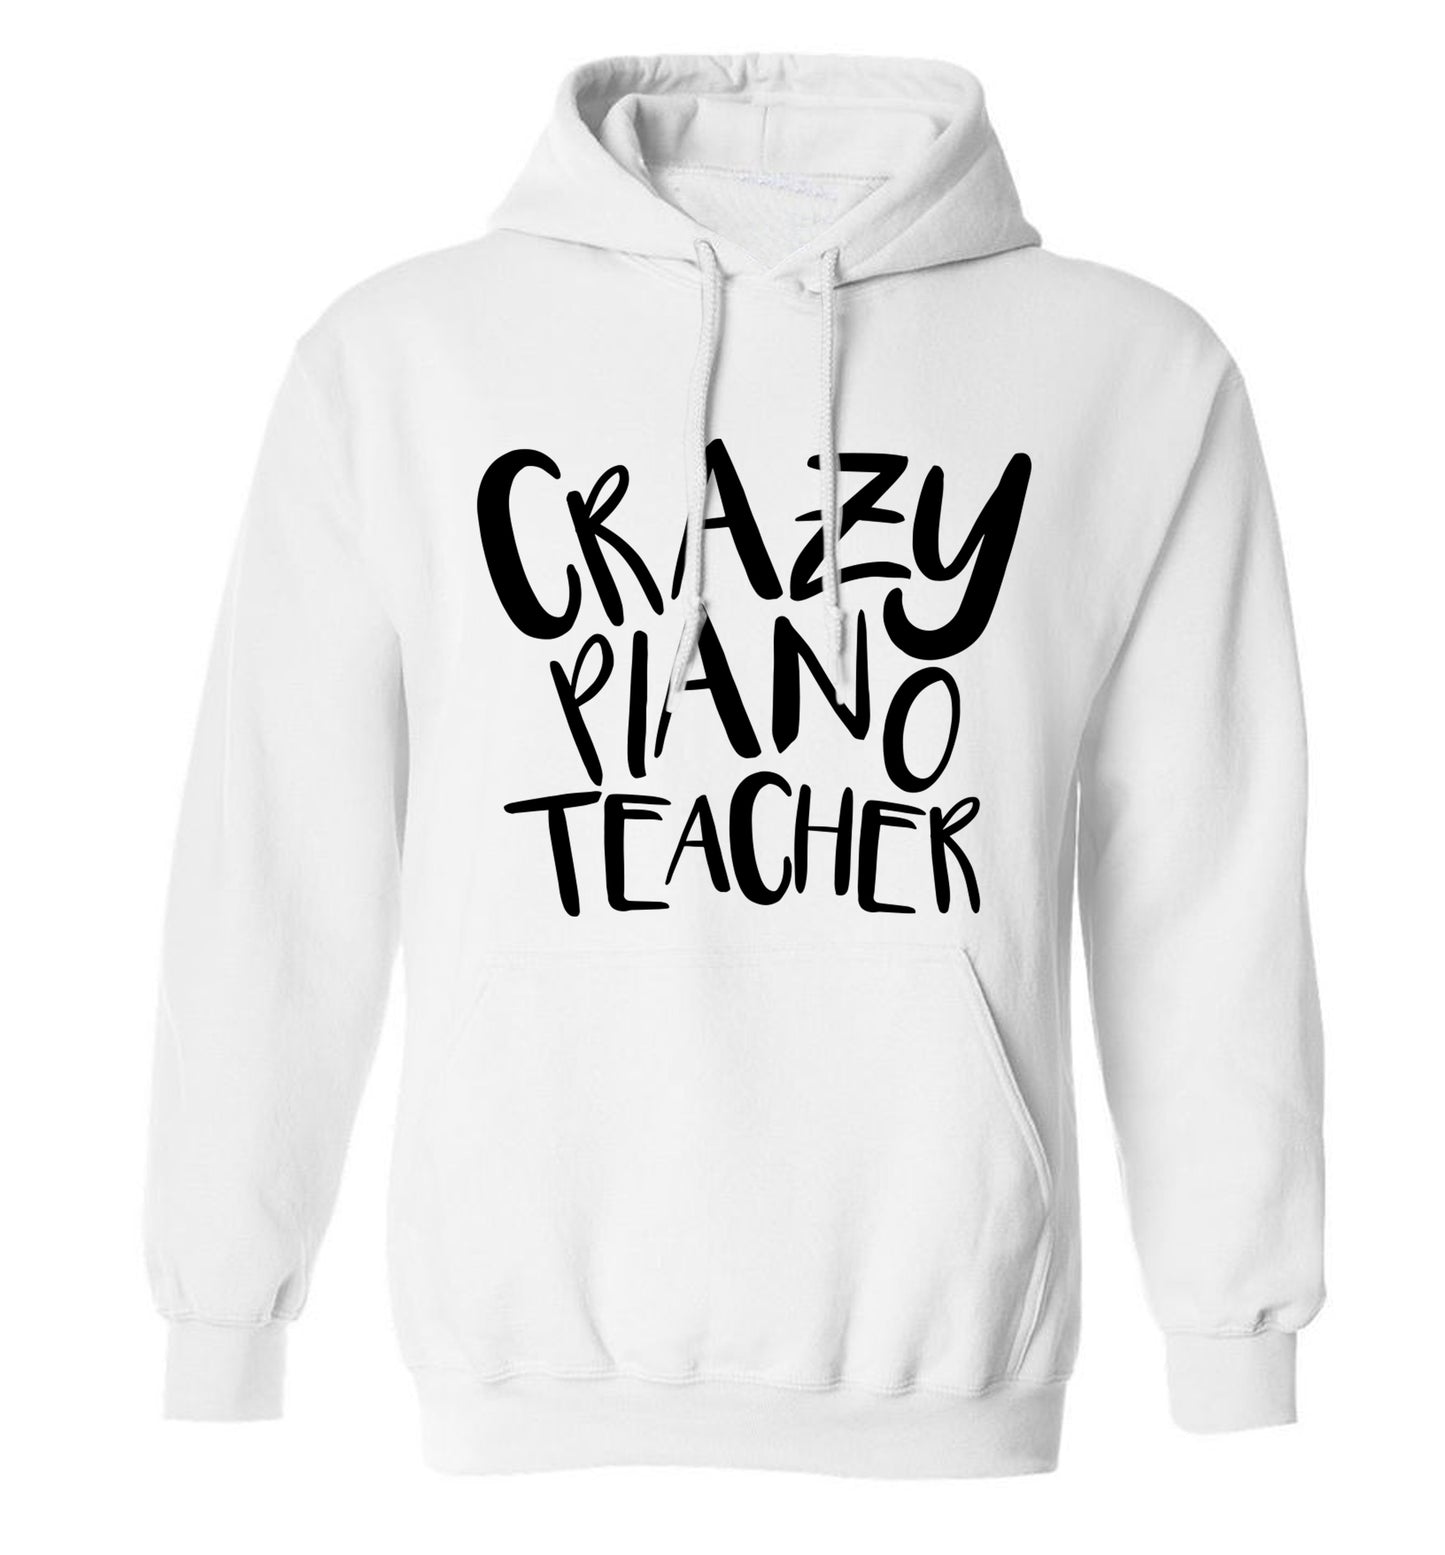 Crazy piano teacher adults unisex white hoodie 2XL